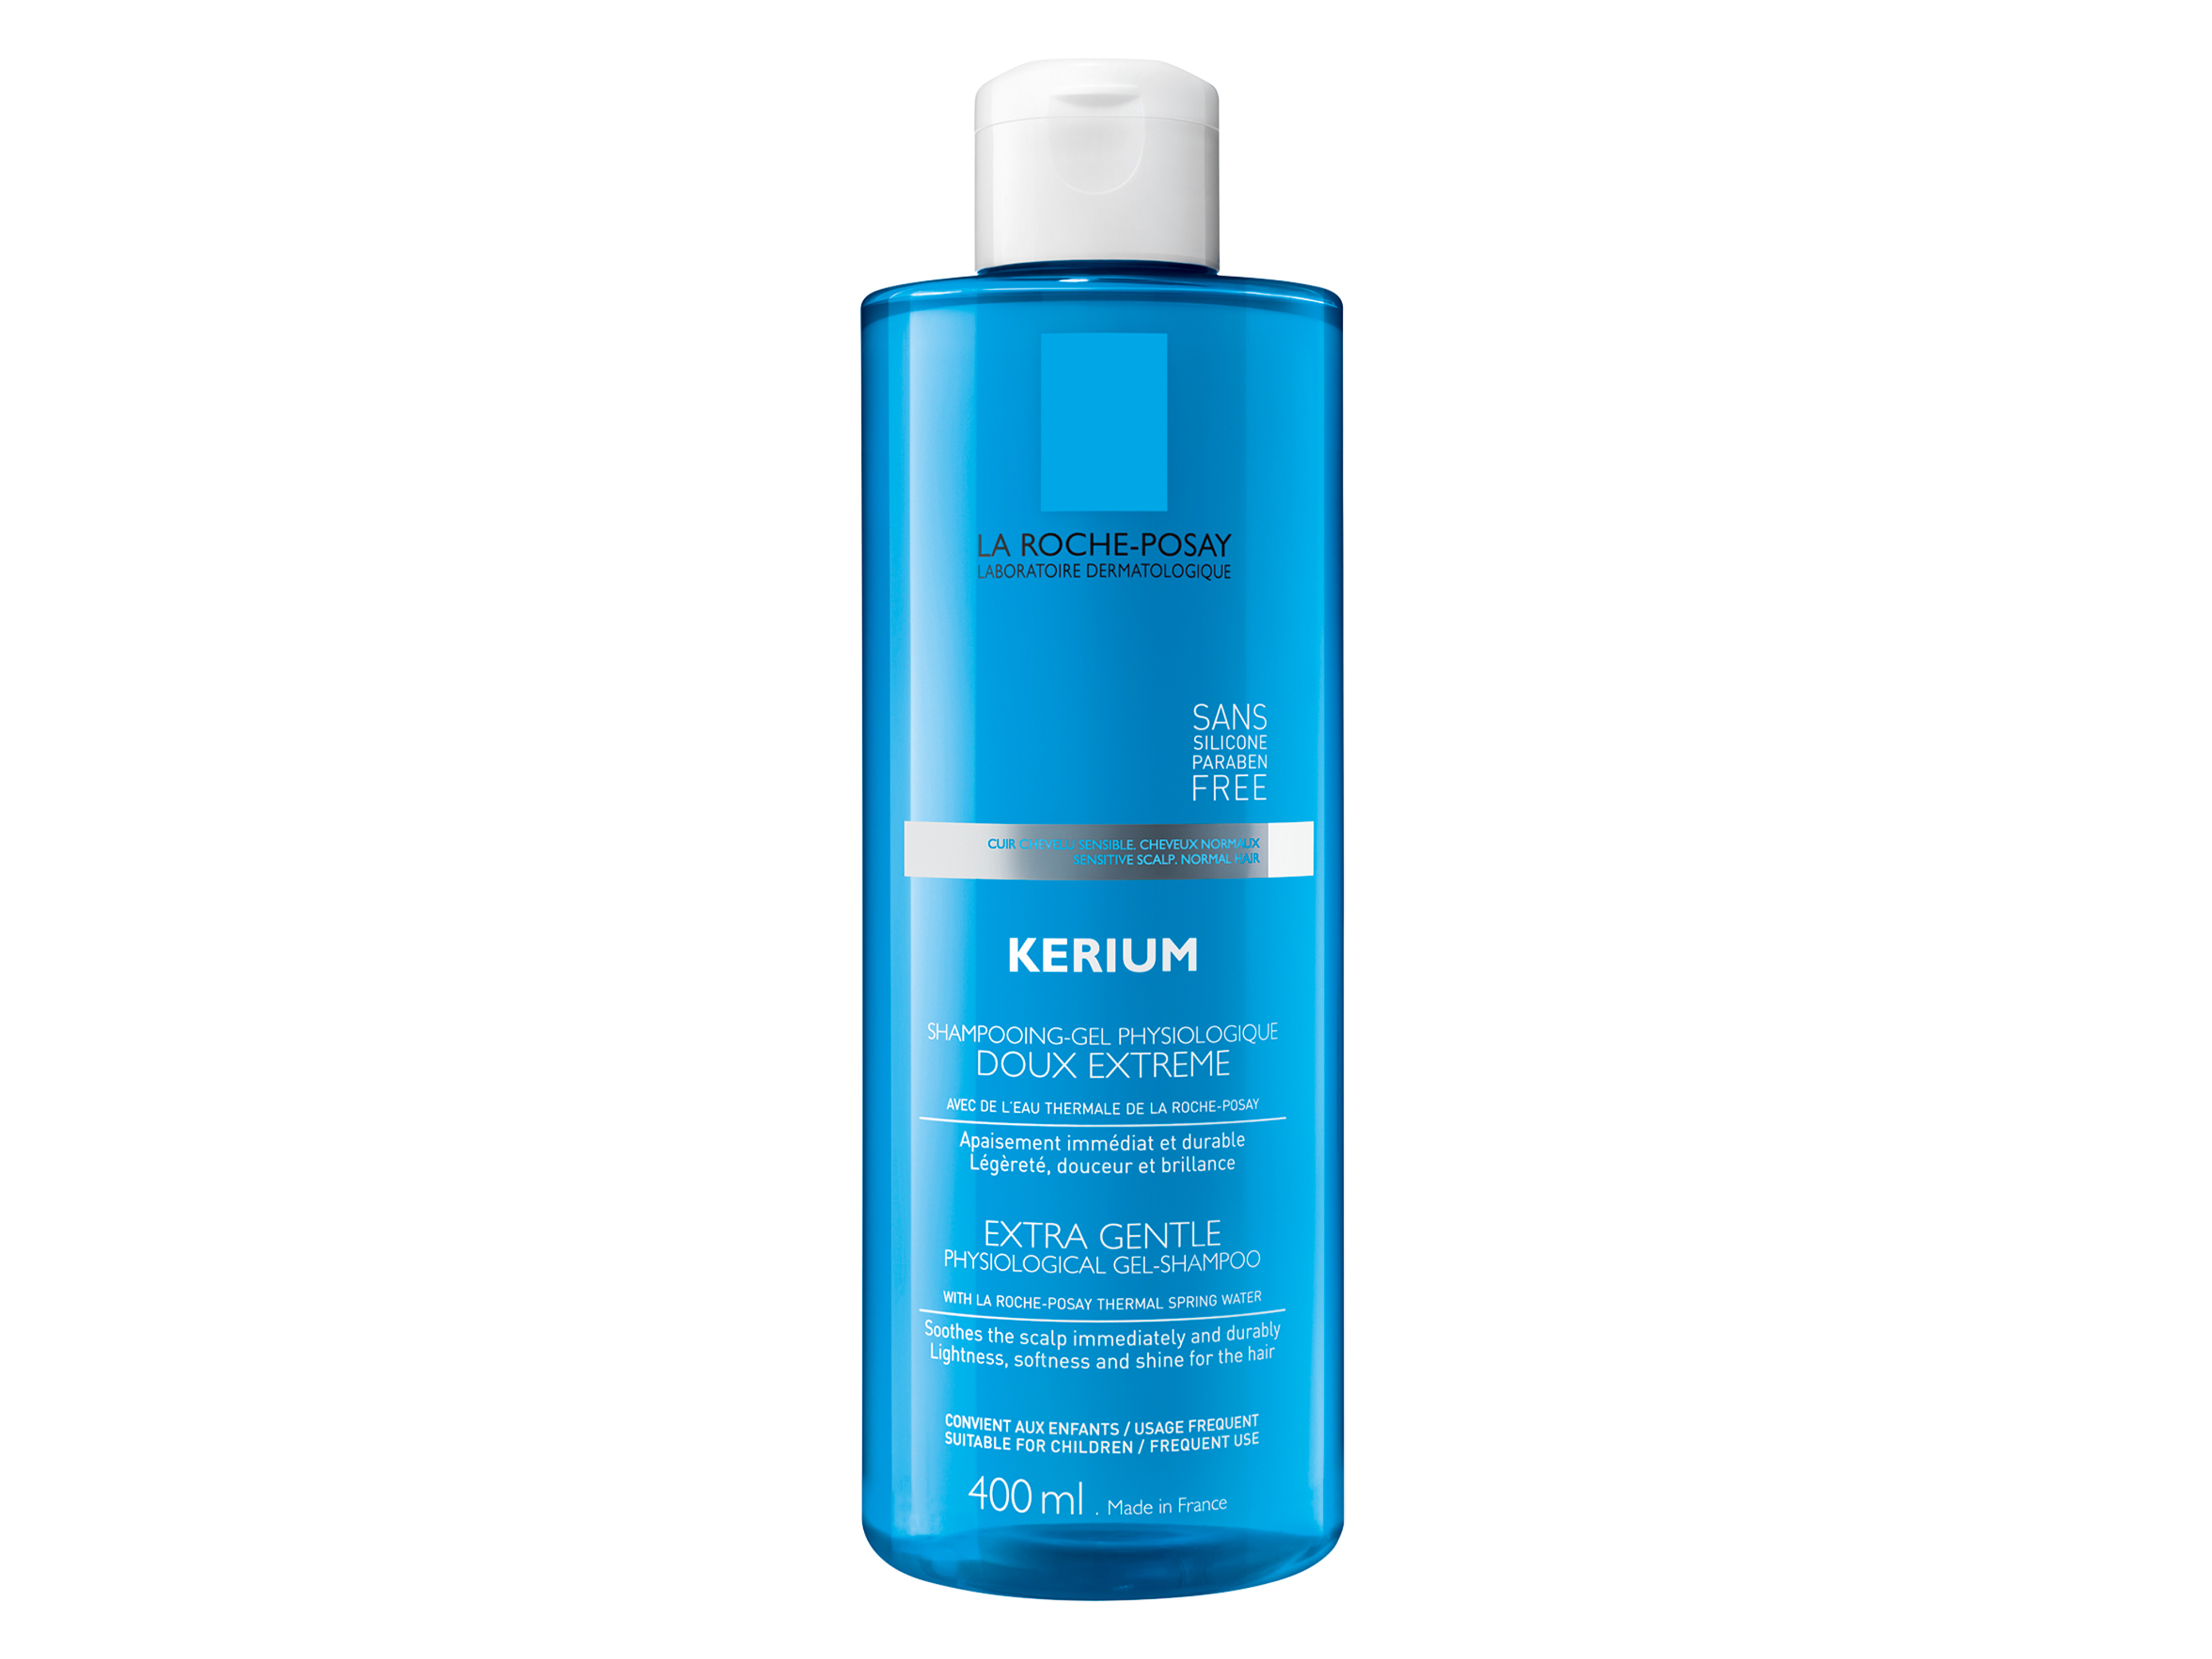 La Roche-Posay Kerium Extra Gentle Shampoo, 400 ml